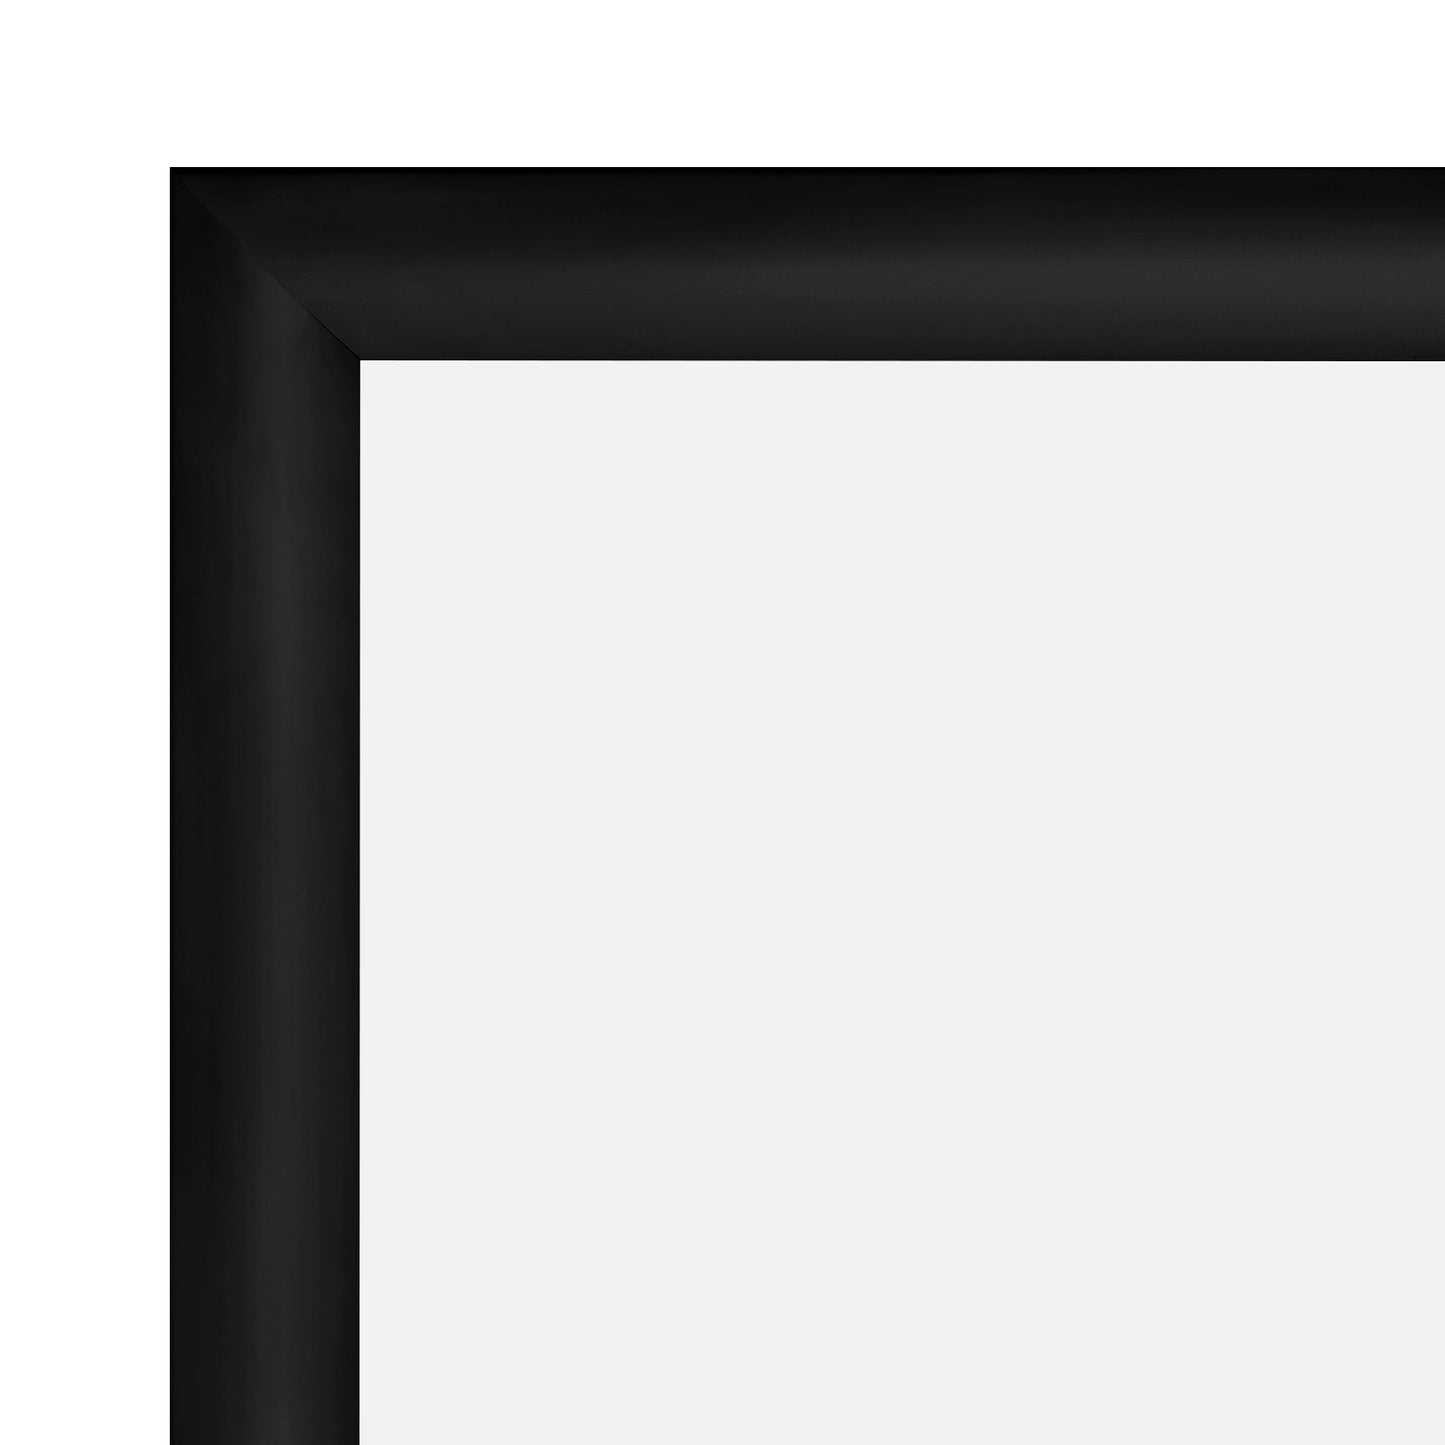 15x24 Black SnapeZo® Snap Frame - 1.2" Profile - Snap Frames Direct